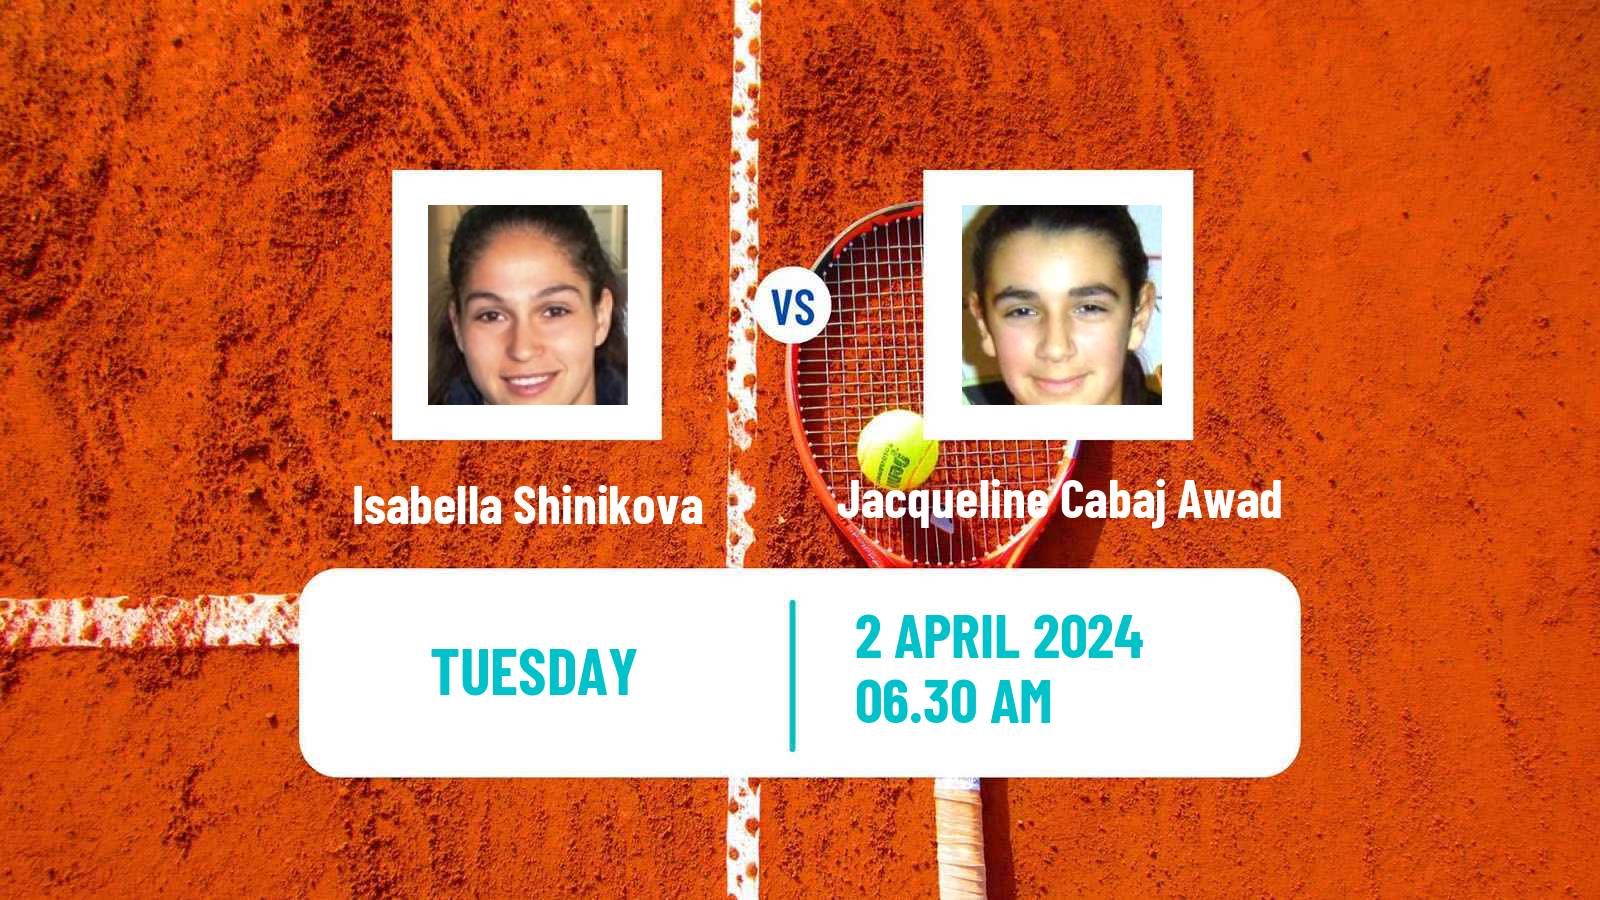 Tennis ITF W35 Hammamet 3 Women Isabella Shinikova - Jacqueline Cabaj Awad